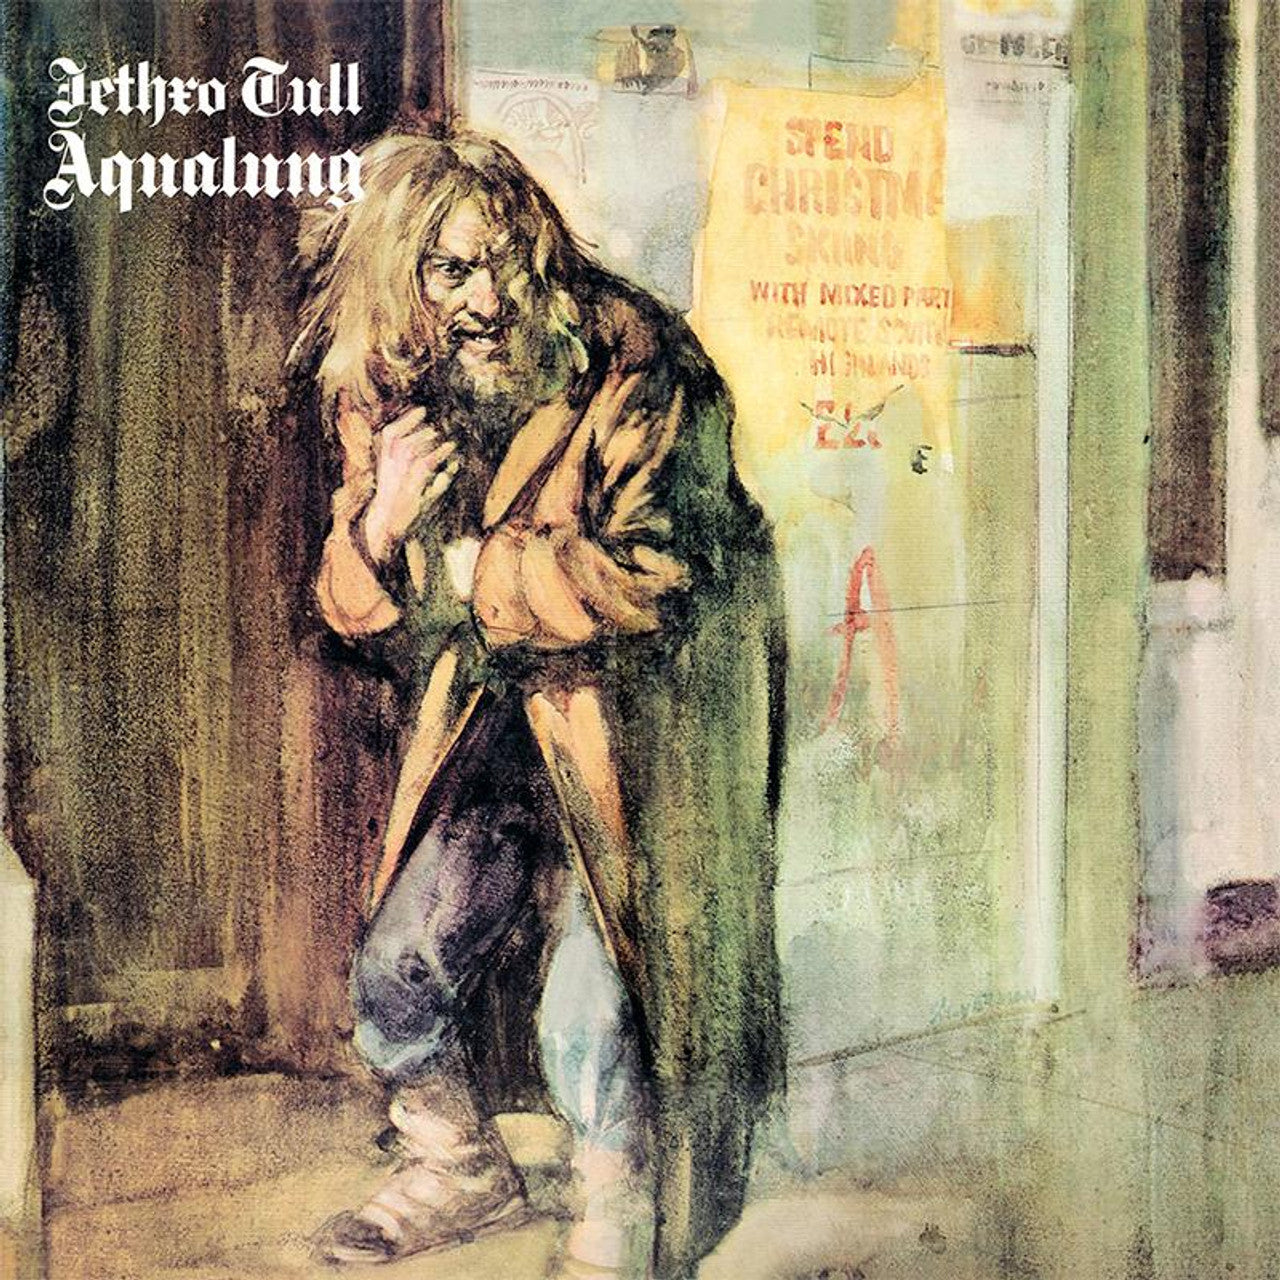 Jethro Tull | Aqualung [SACD]